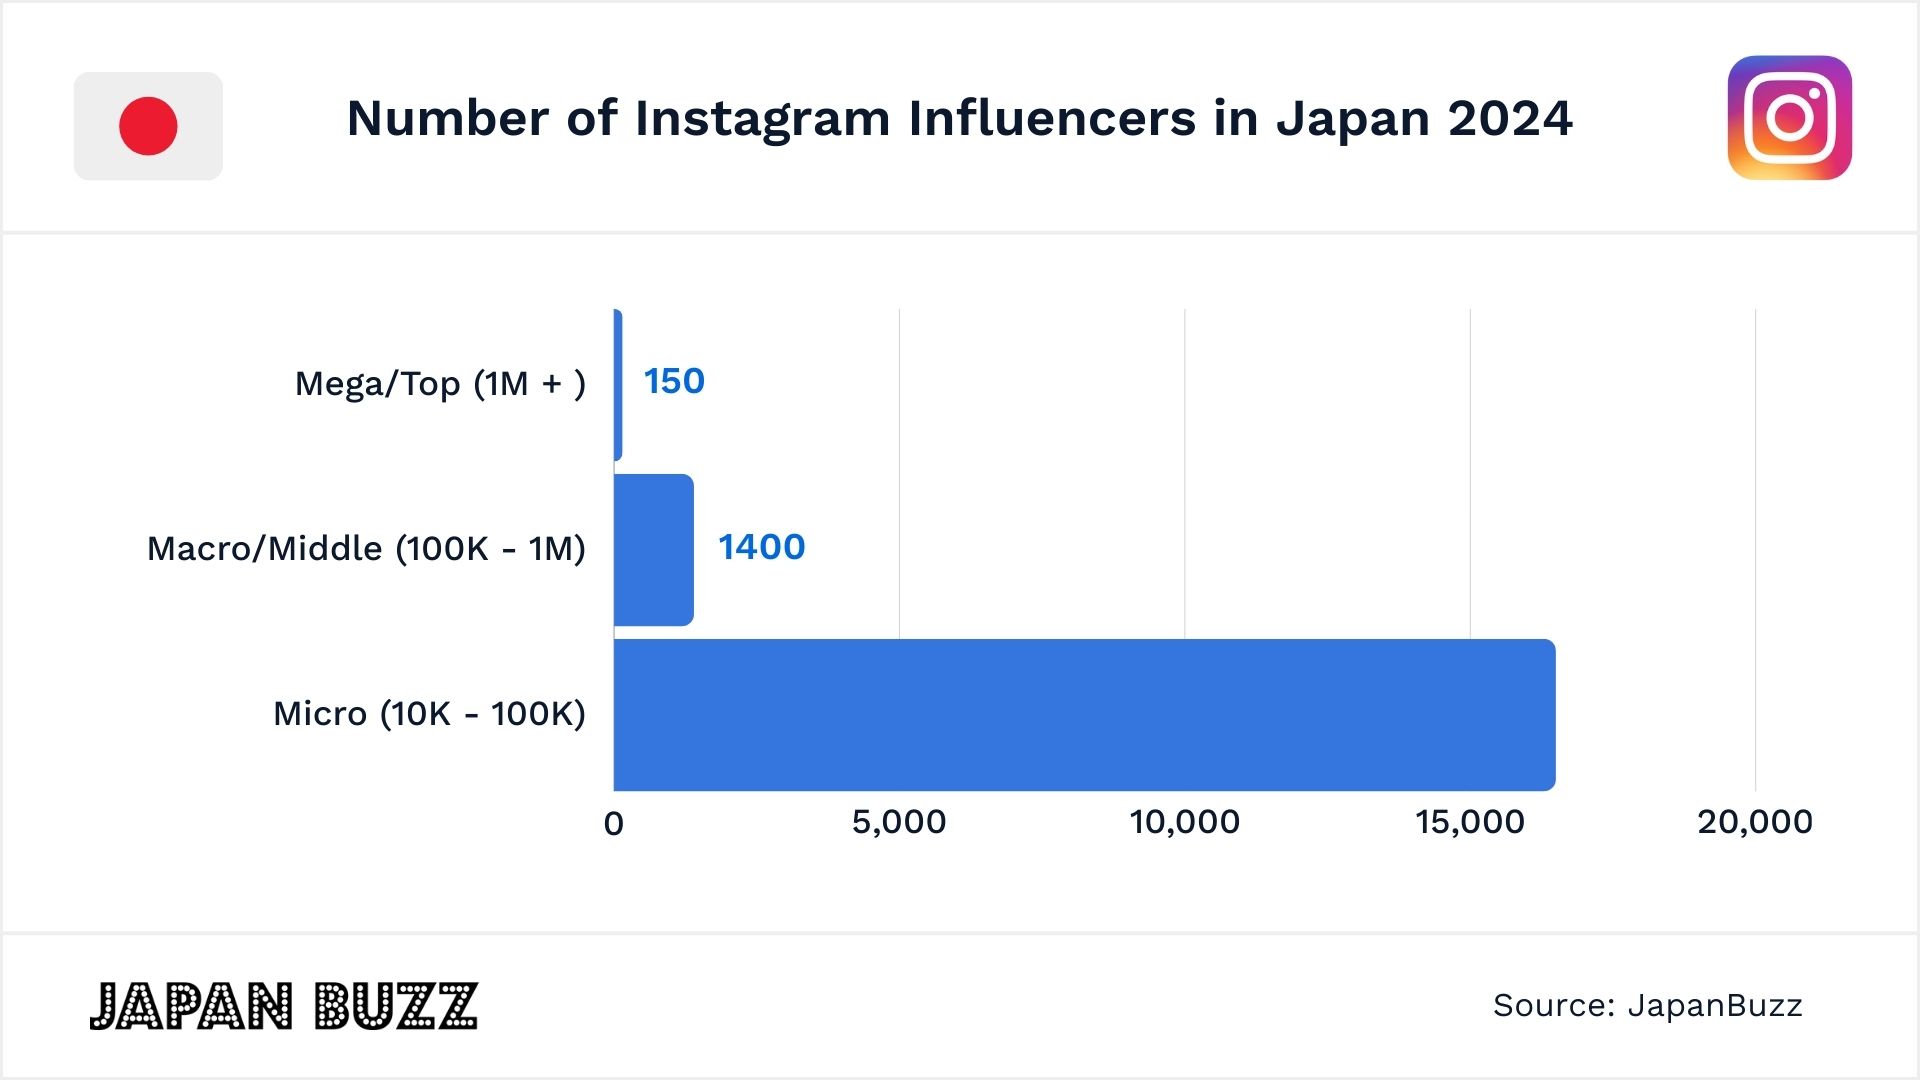 Number of Instagram Influencers on Instagram in Japan 2024